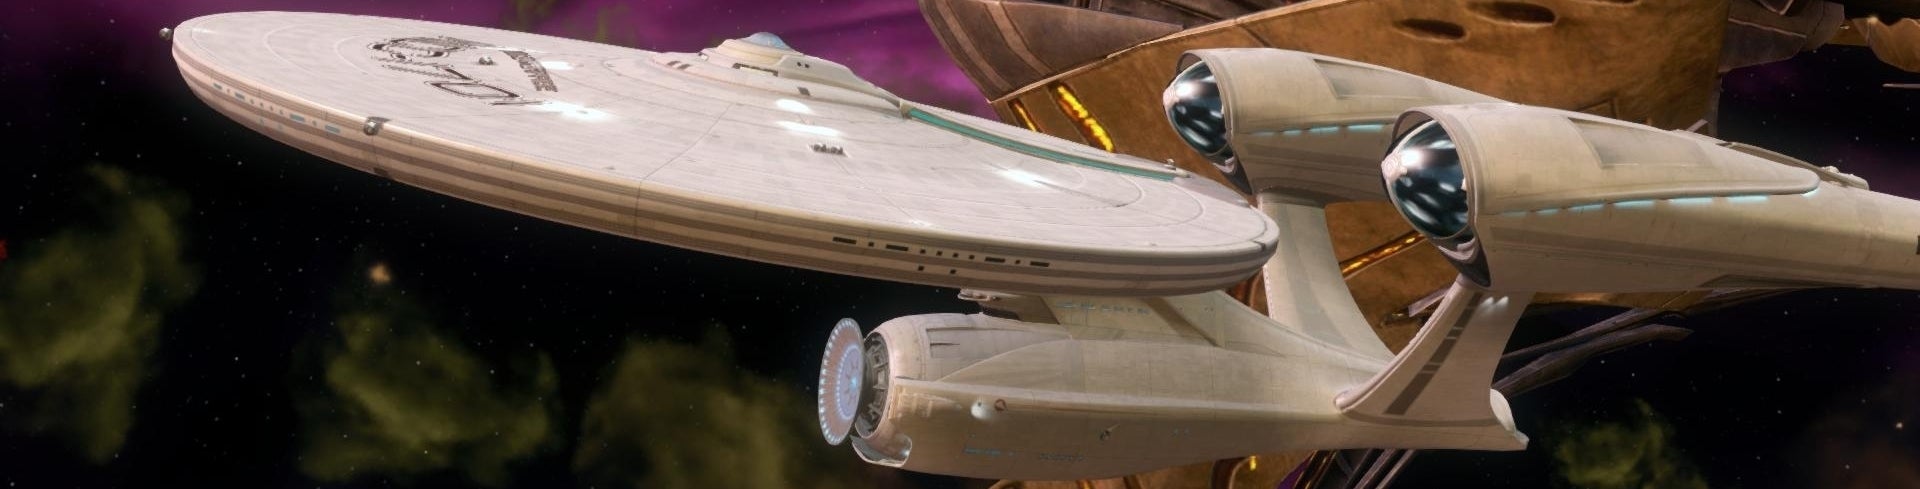 Imagen para Análisis de Star Trek